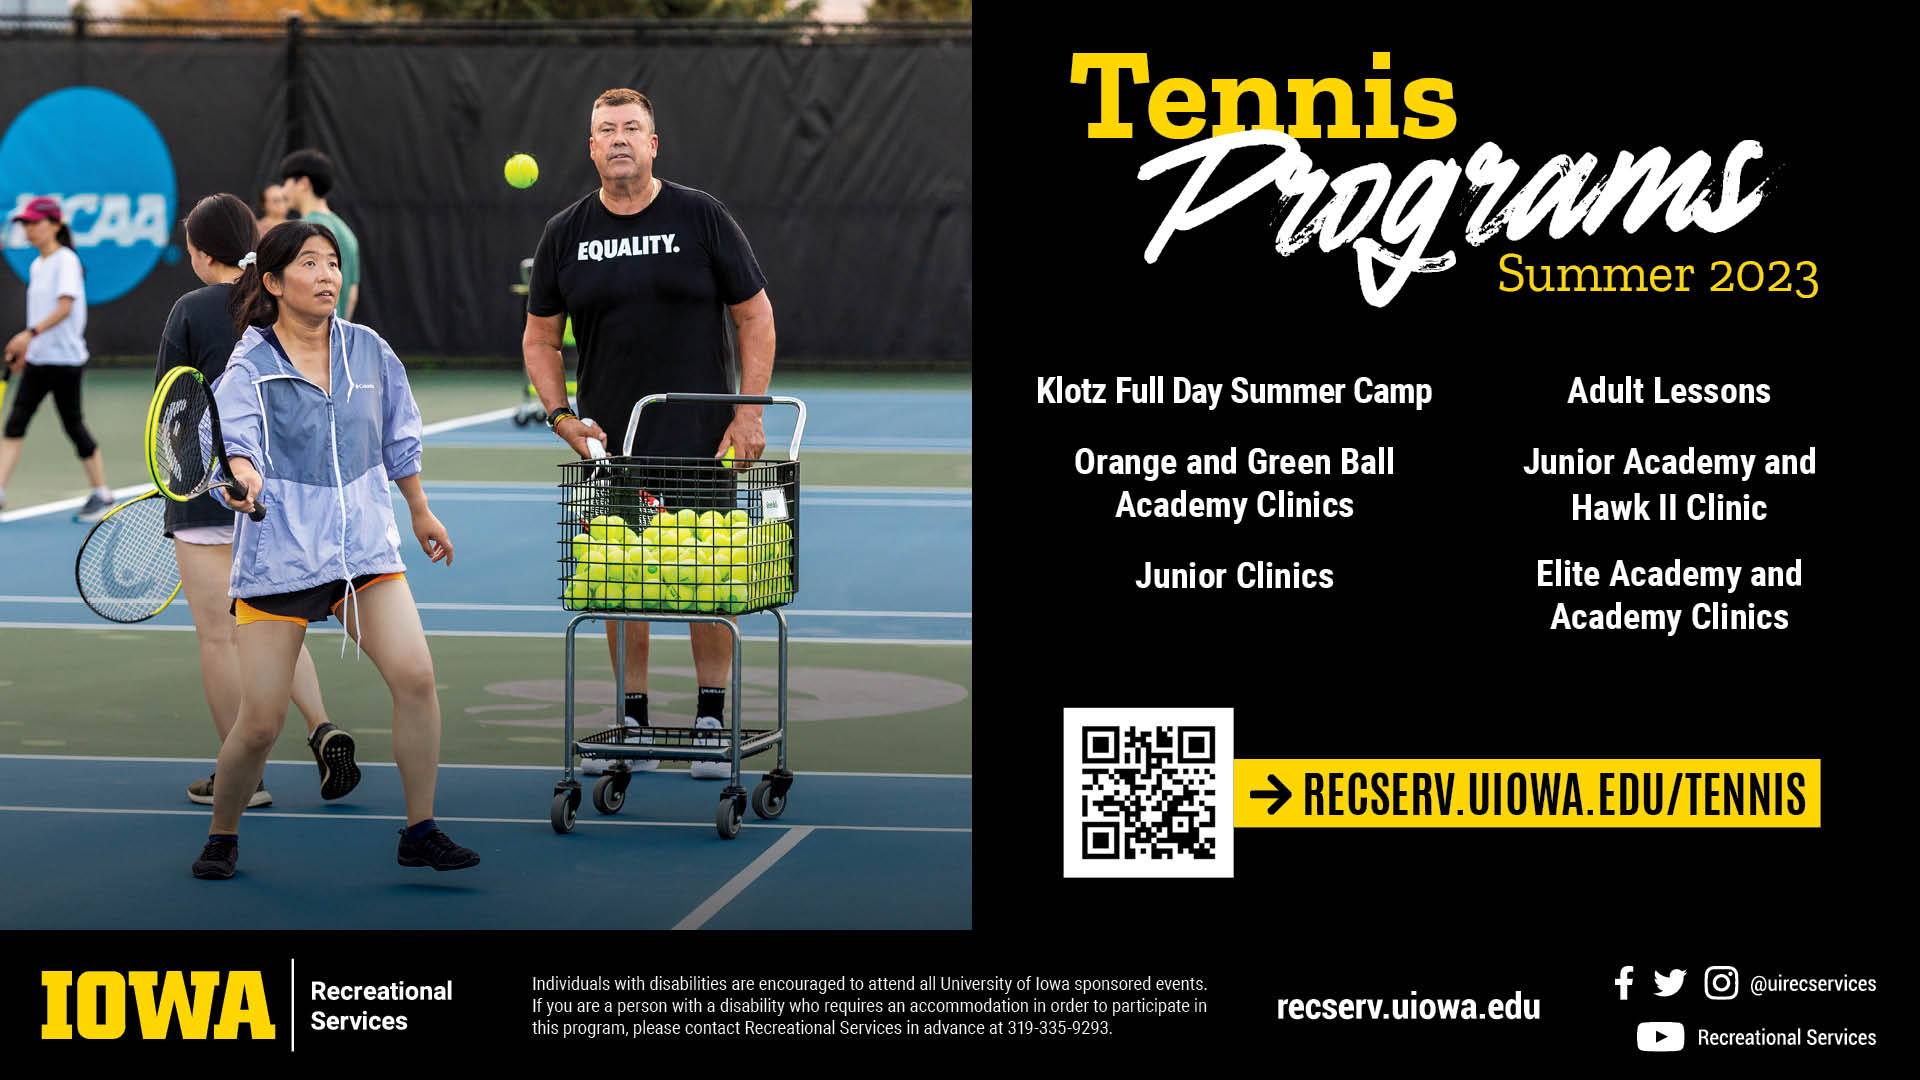 Tennis Programs recserv.uiowa.edu/tennis